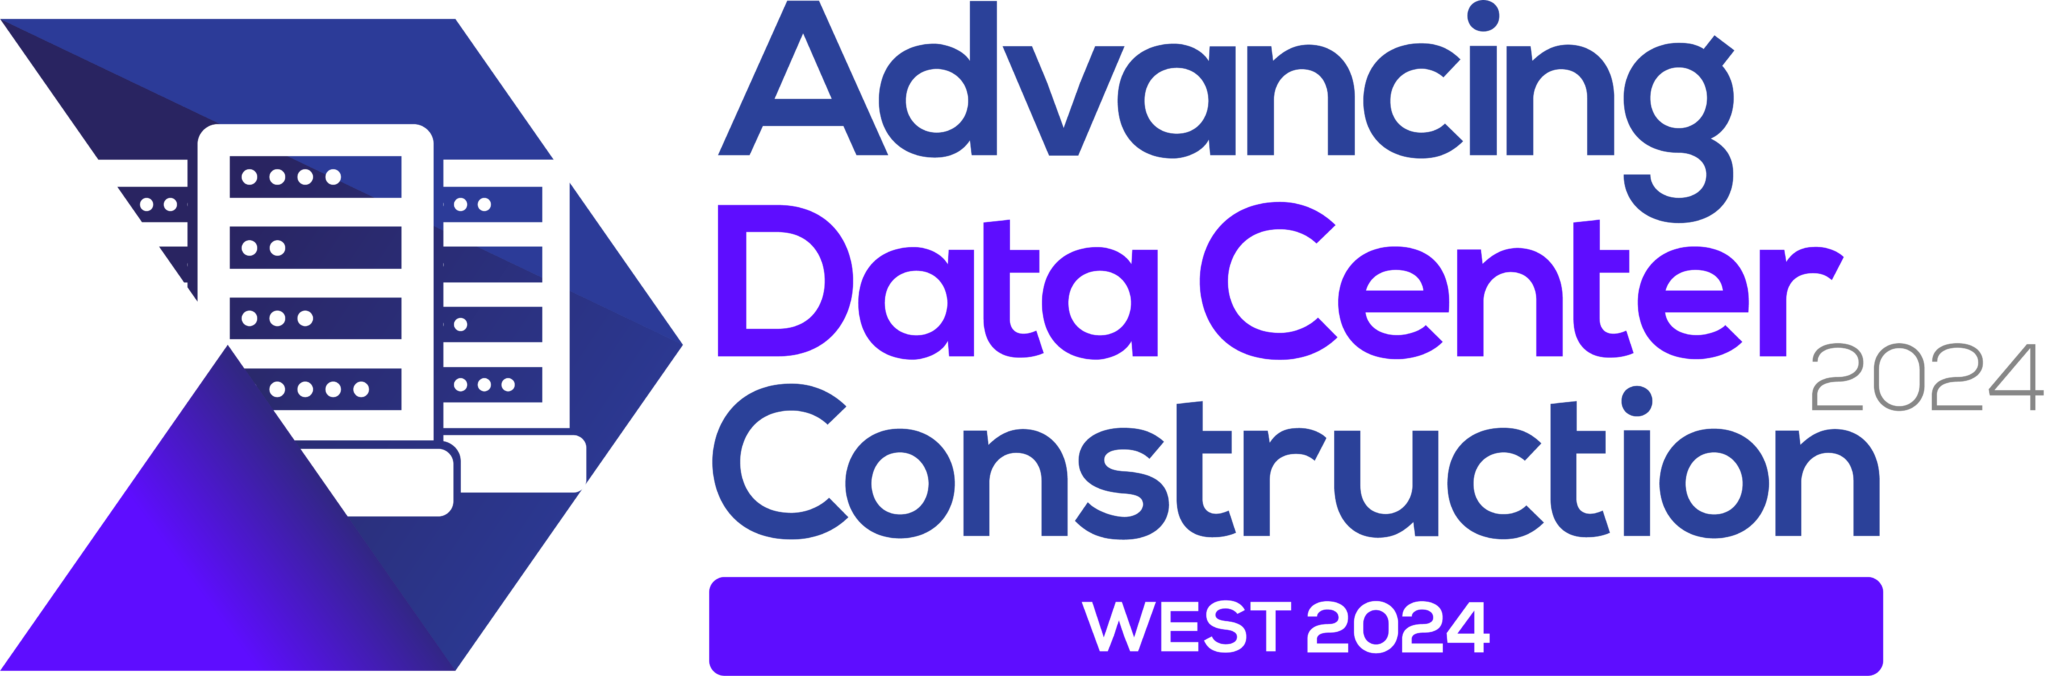 Advancing Data Center Construction West 2024 Home